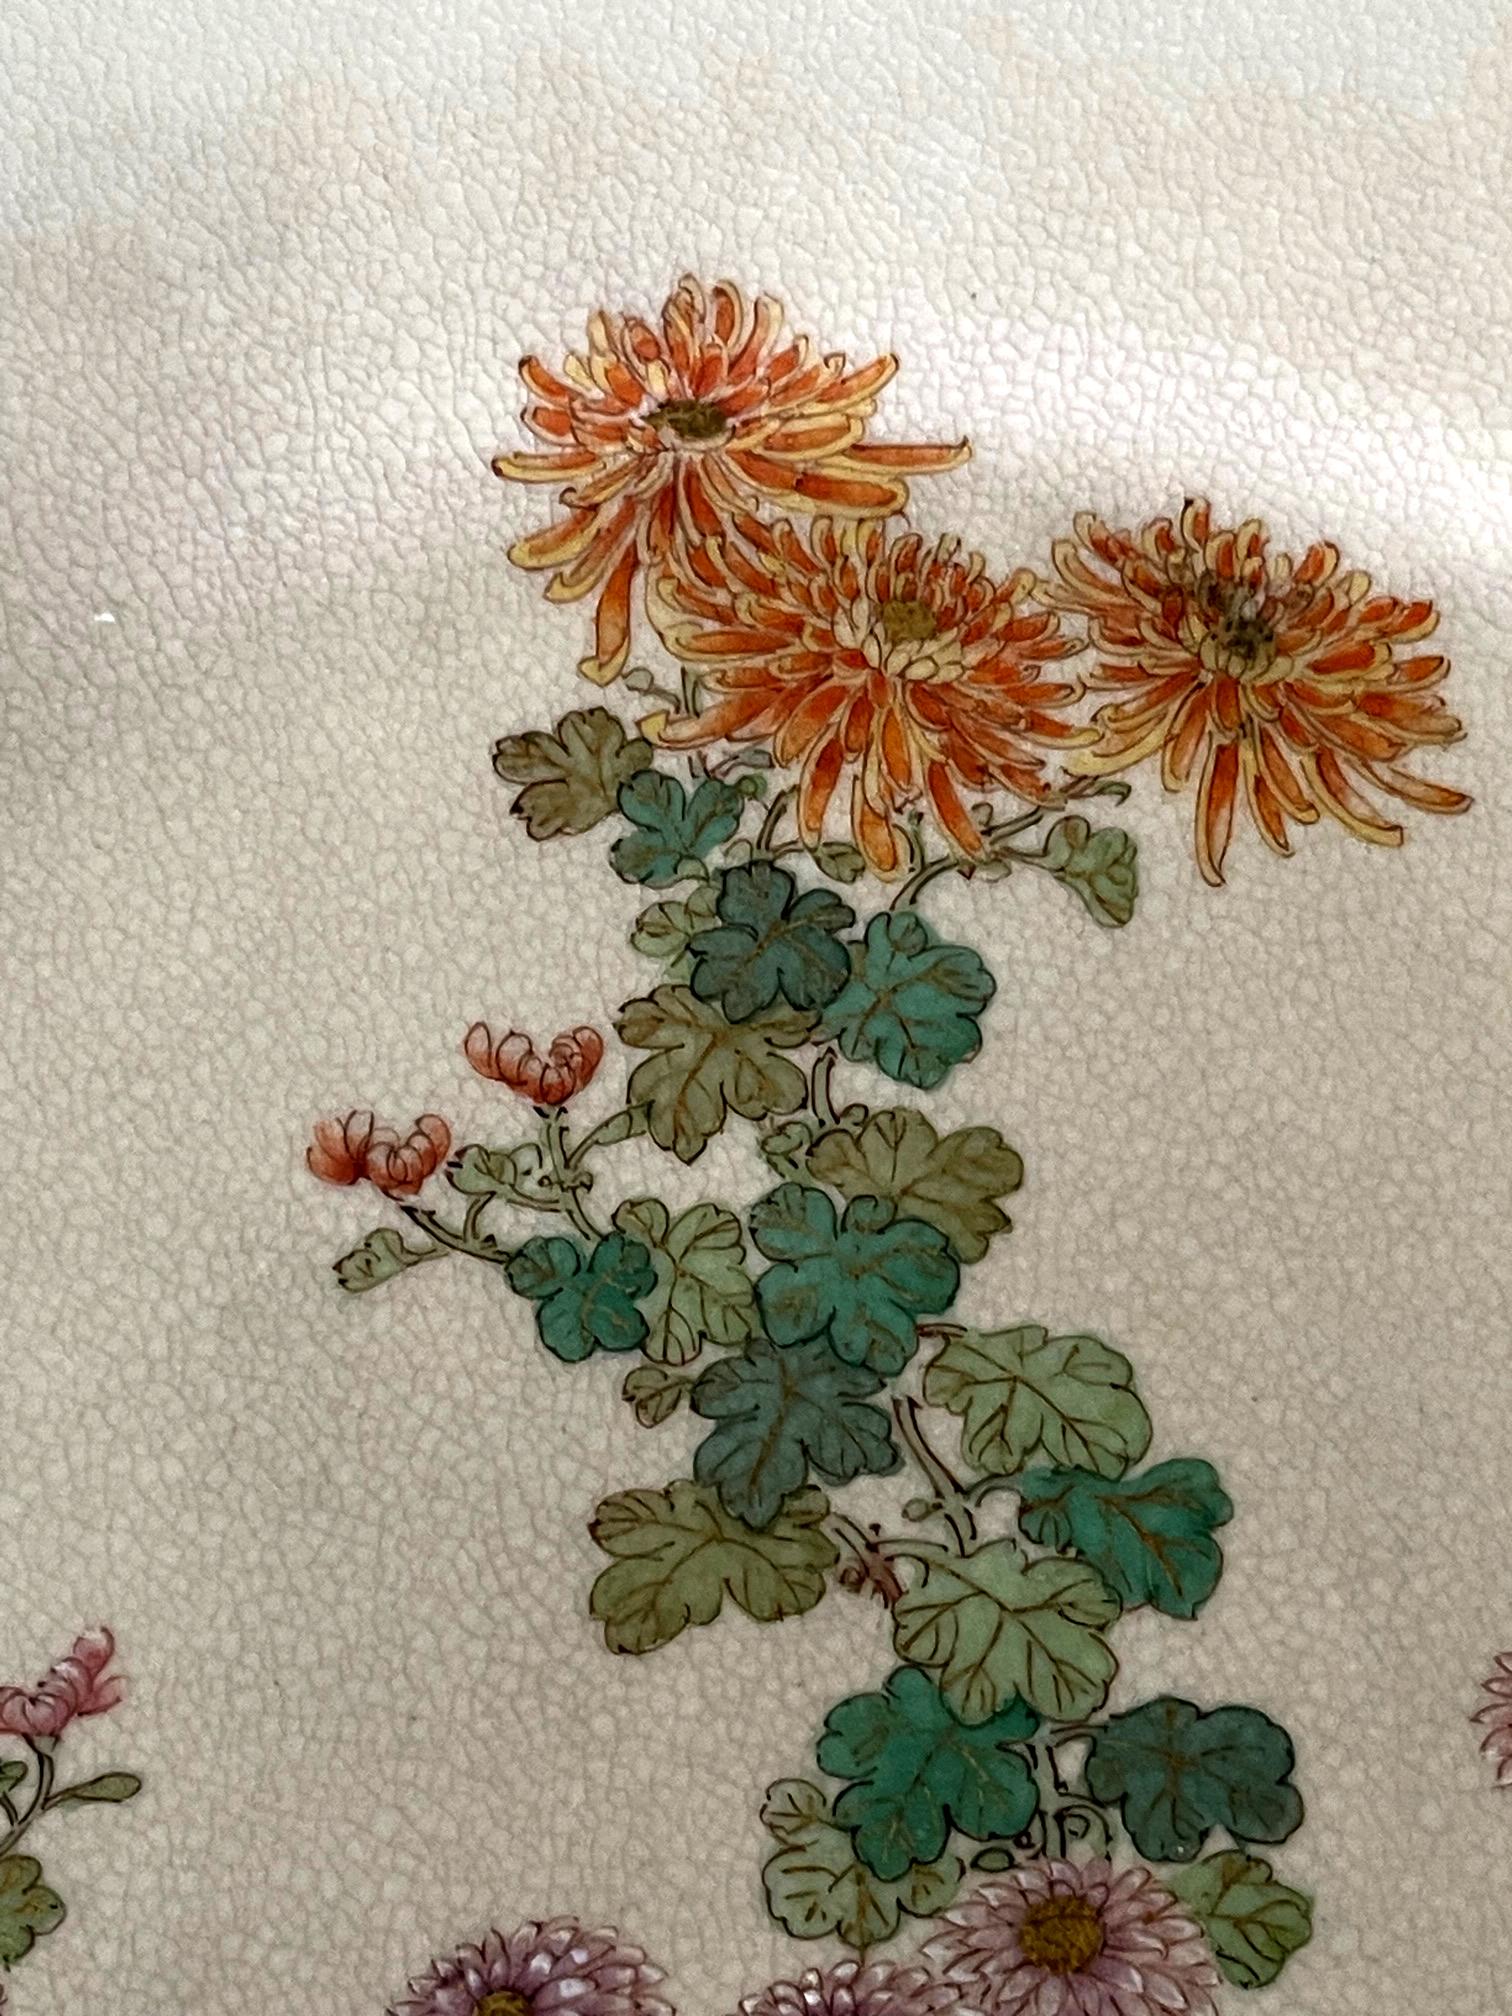 Fine Japanese Ceramic Plate by Kinkozan for Yamanaka & Co. For Sale 4